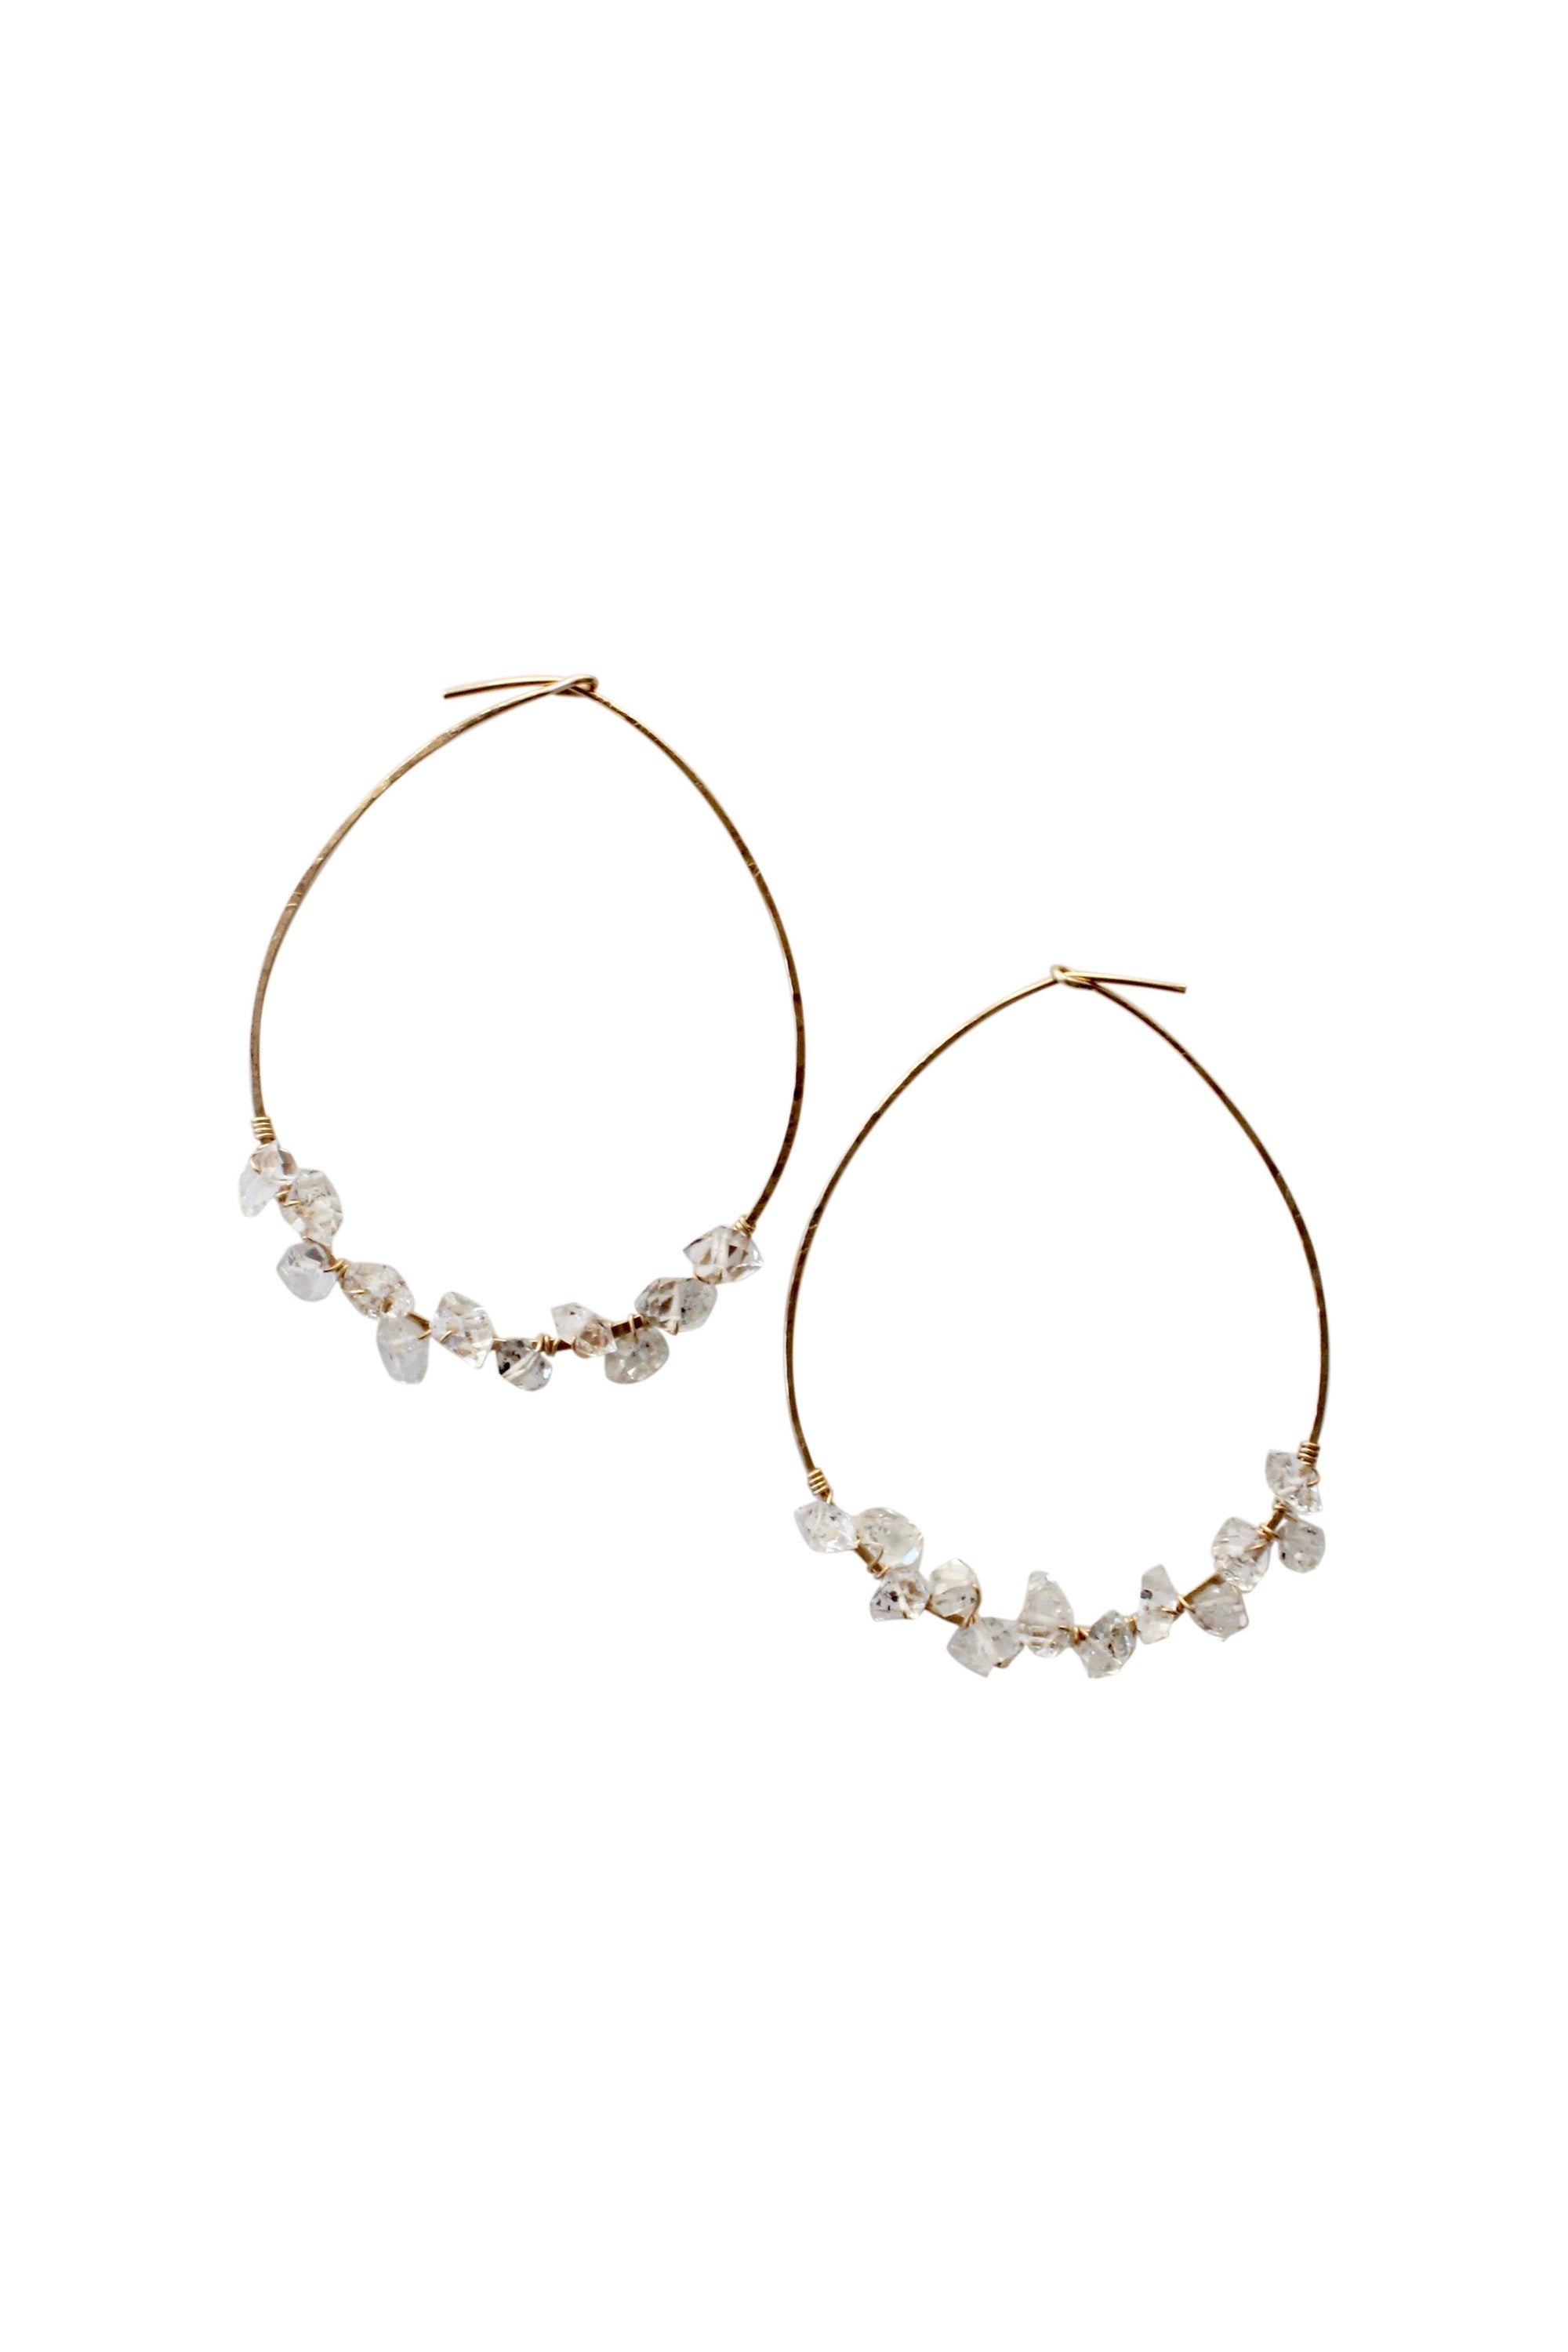 Herkimer Diamond Wire Wrapped Hoop Earrings